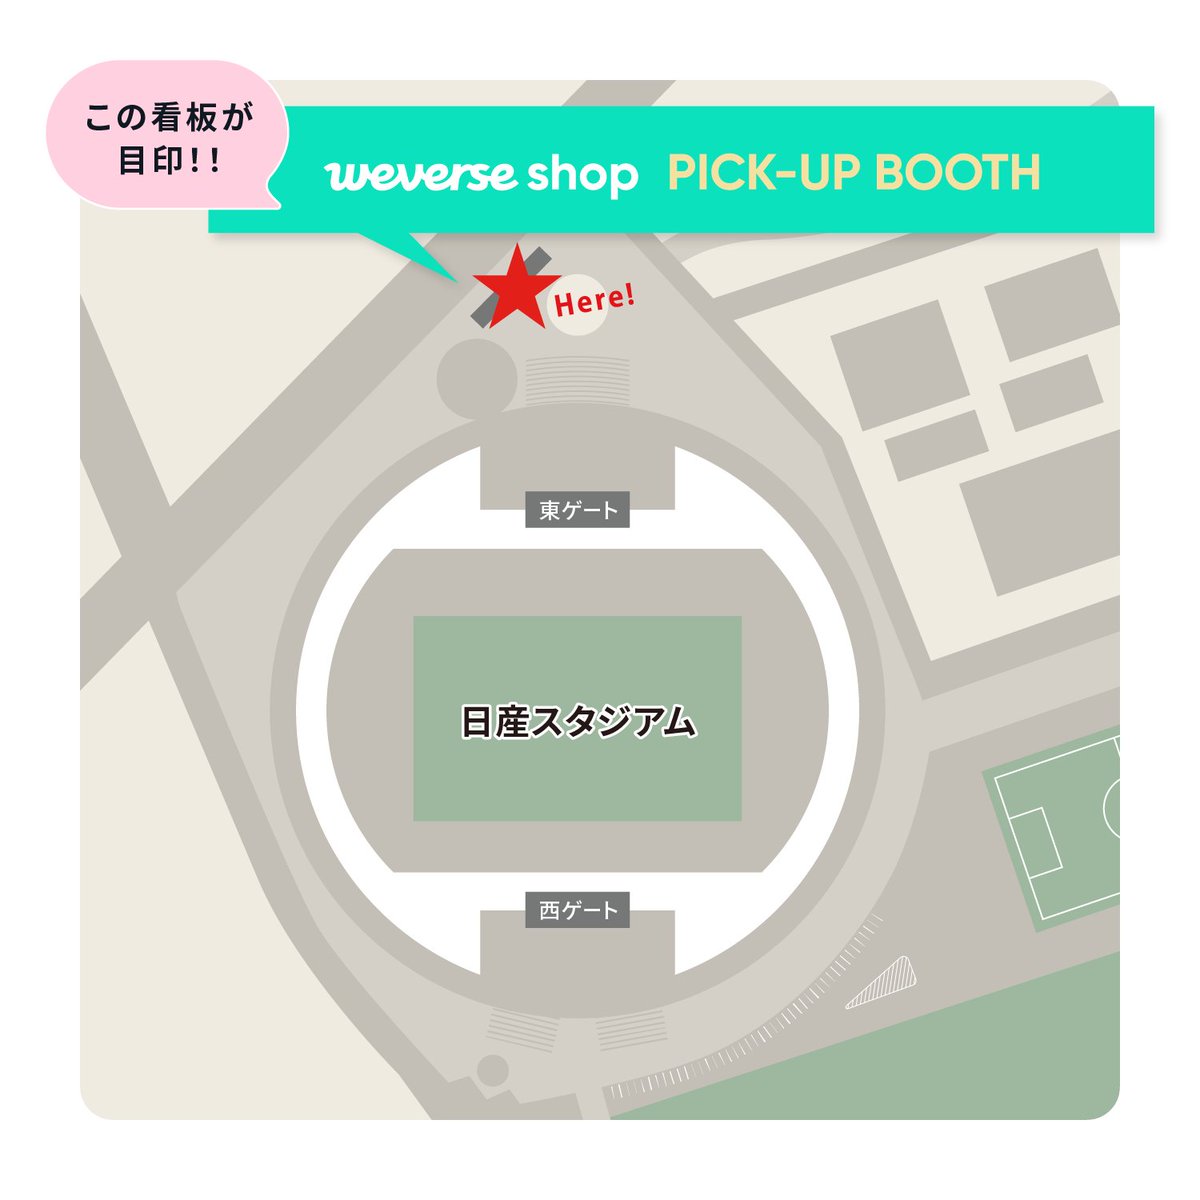 [#SEVENTEEN JAPAN NEWS] 『SEVENTEEN TOUR 'FOLLOW' AGAIN TO JAPAN』神奈川公演2日目！ OFFICIAL MERCHANDISE 公演会場販売がスタートしました！ 📍weverseshop.onelink.me/BZSY/yq47jzw6 #SVT_TOUR_FOLLOW_AGAIN #FOLLOW_AGAIN